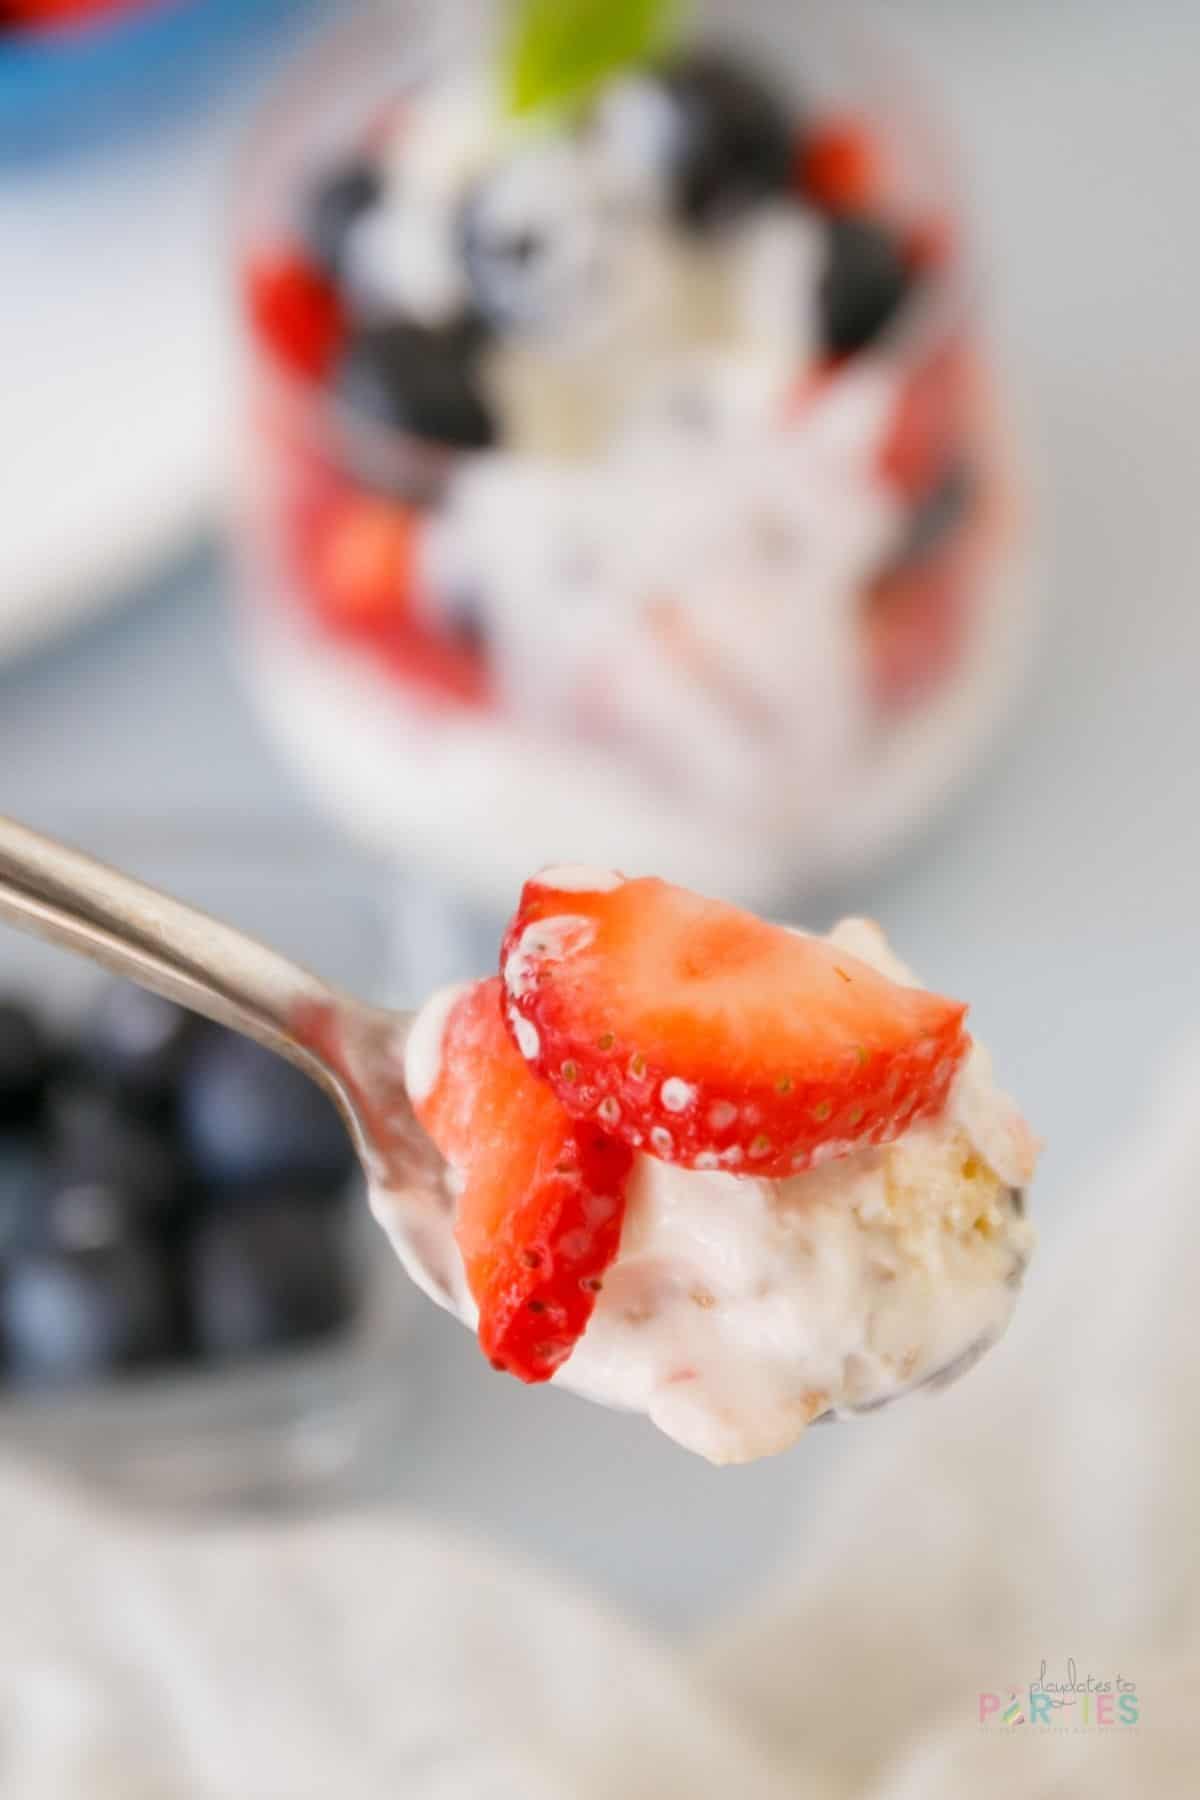 Bite shot of a spoon with yogurt, granola, and strawberries.